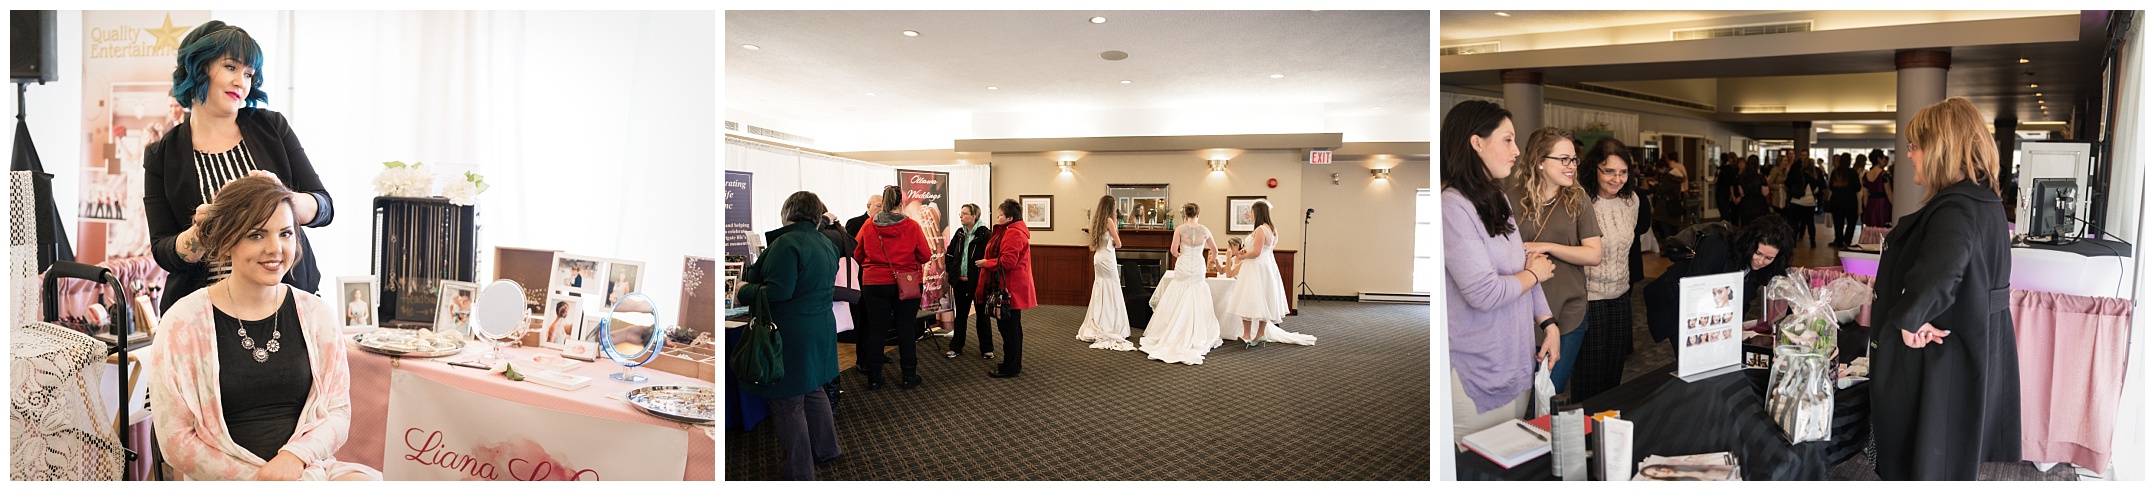 Ottawa wedding photography by Stacey Stewart_0520.jpg